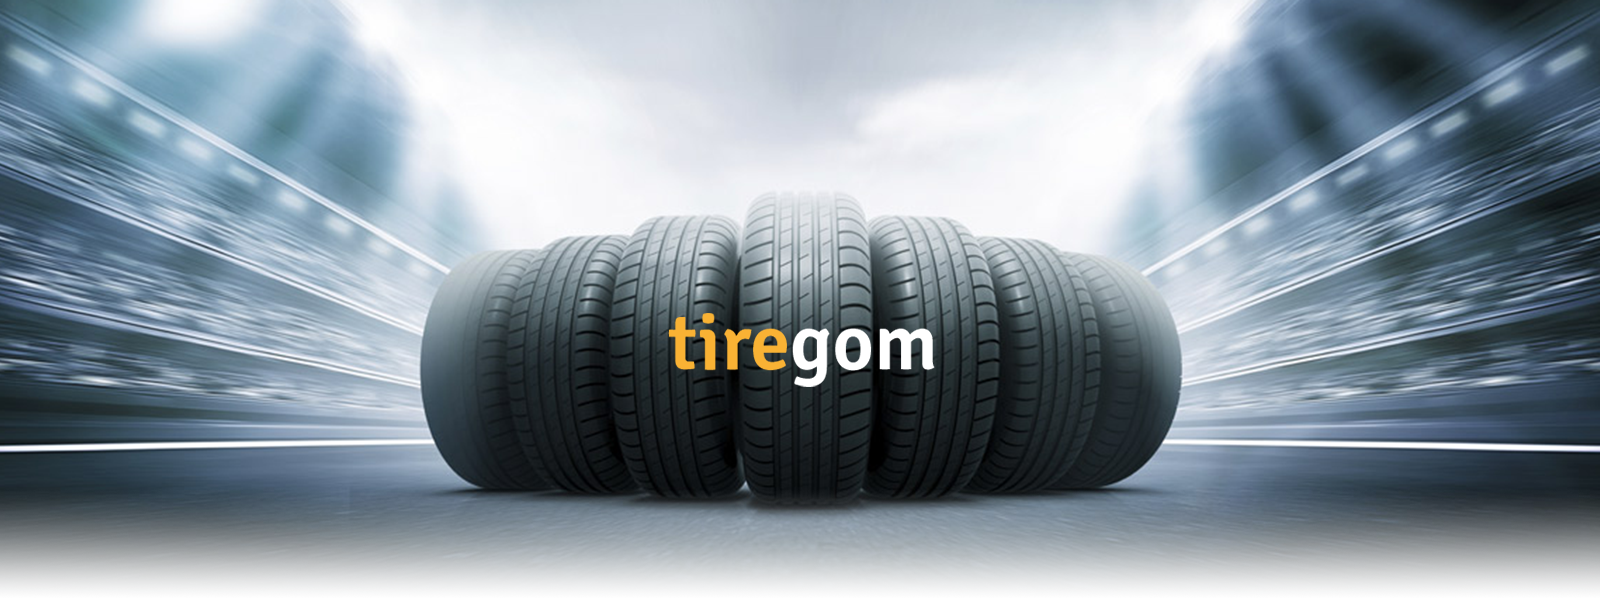 Tiregom.ch : Reifenvergleichstool